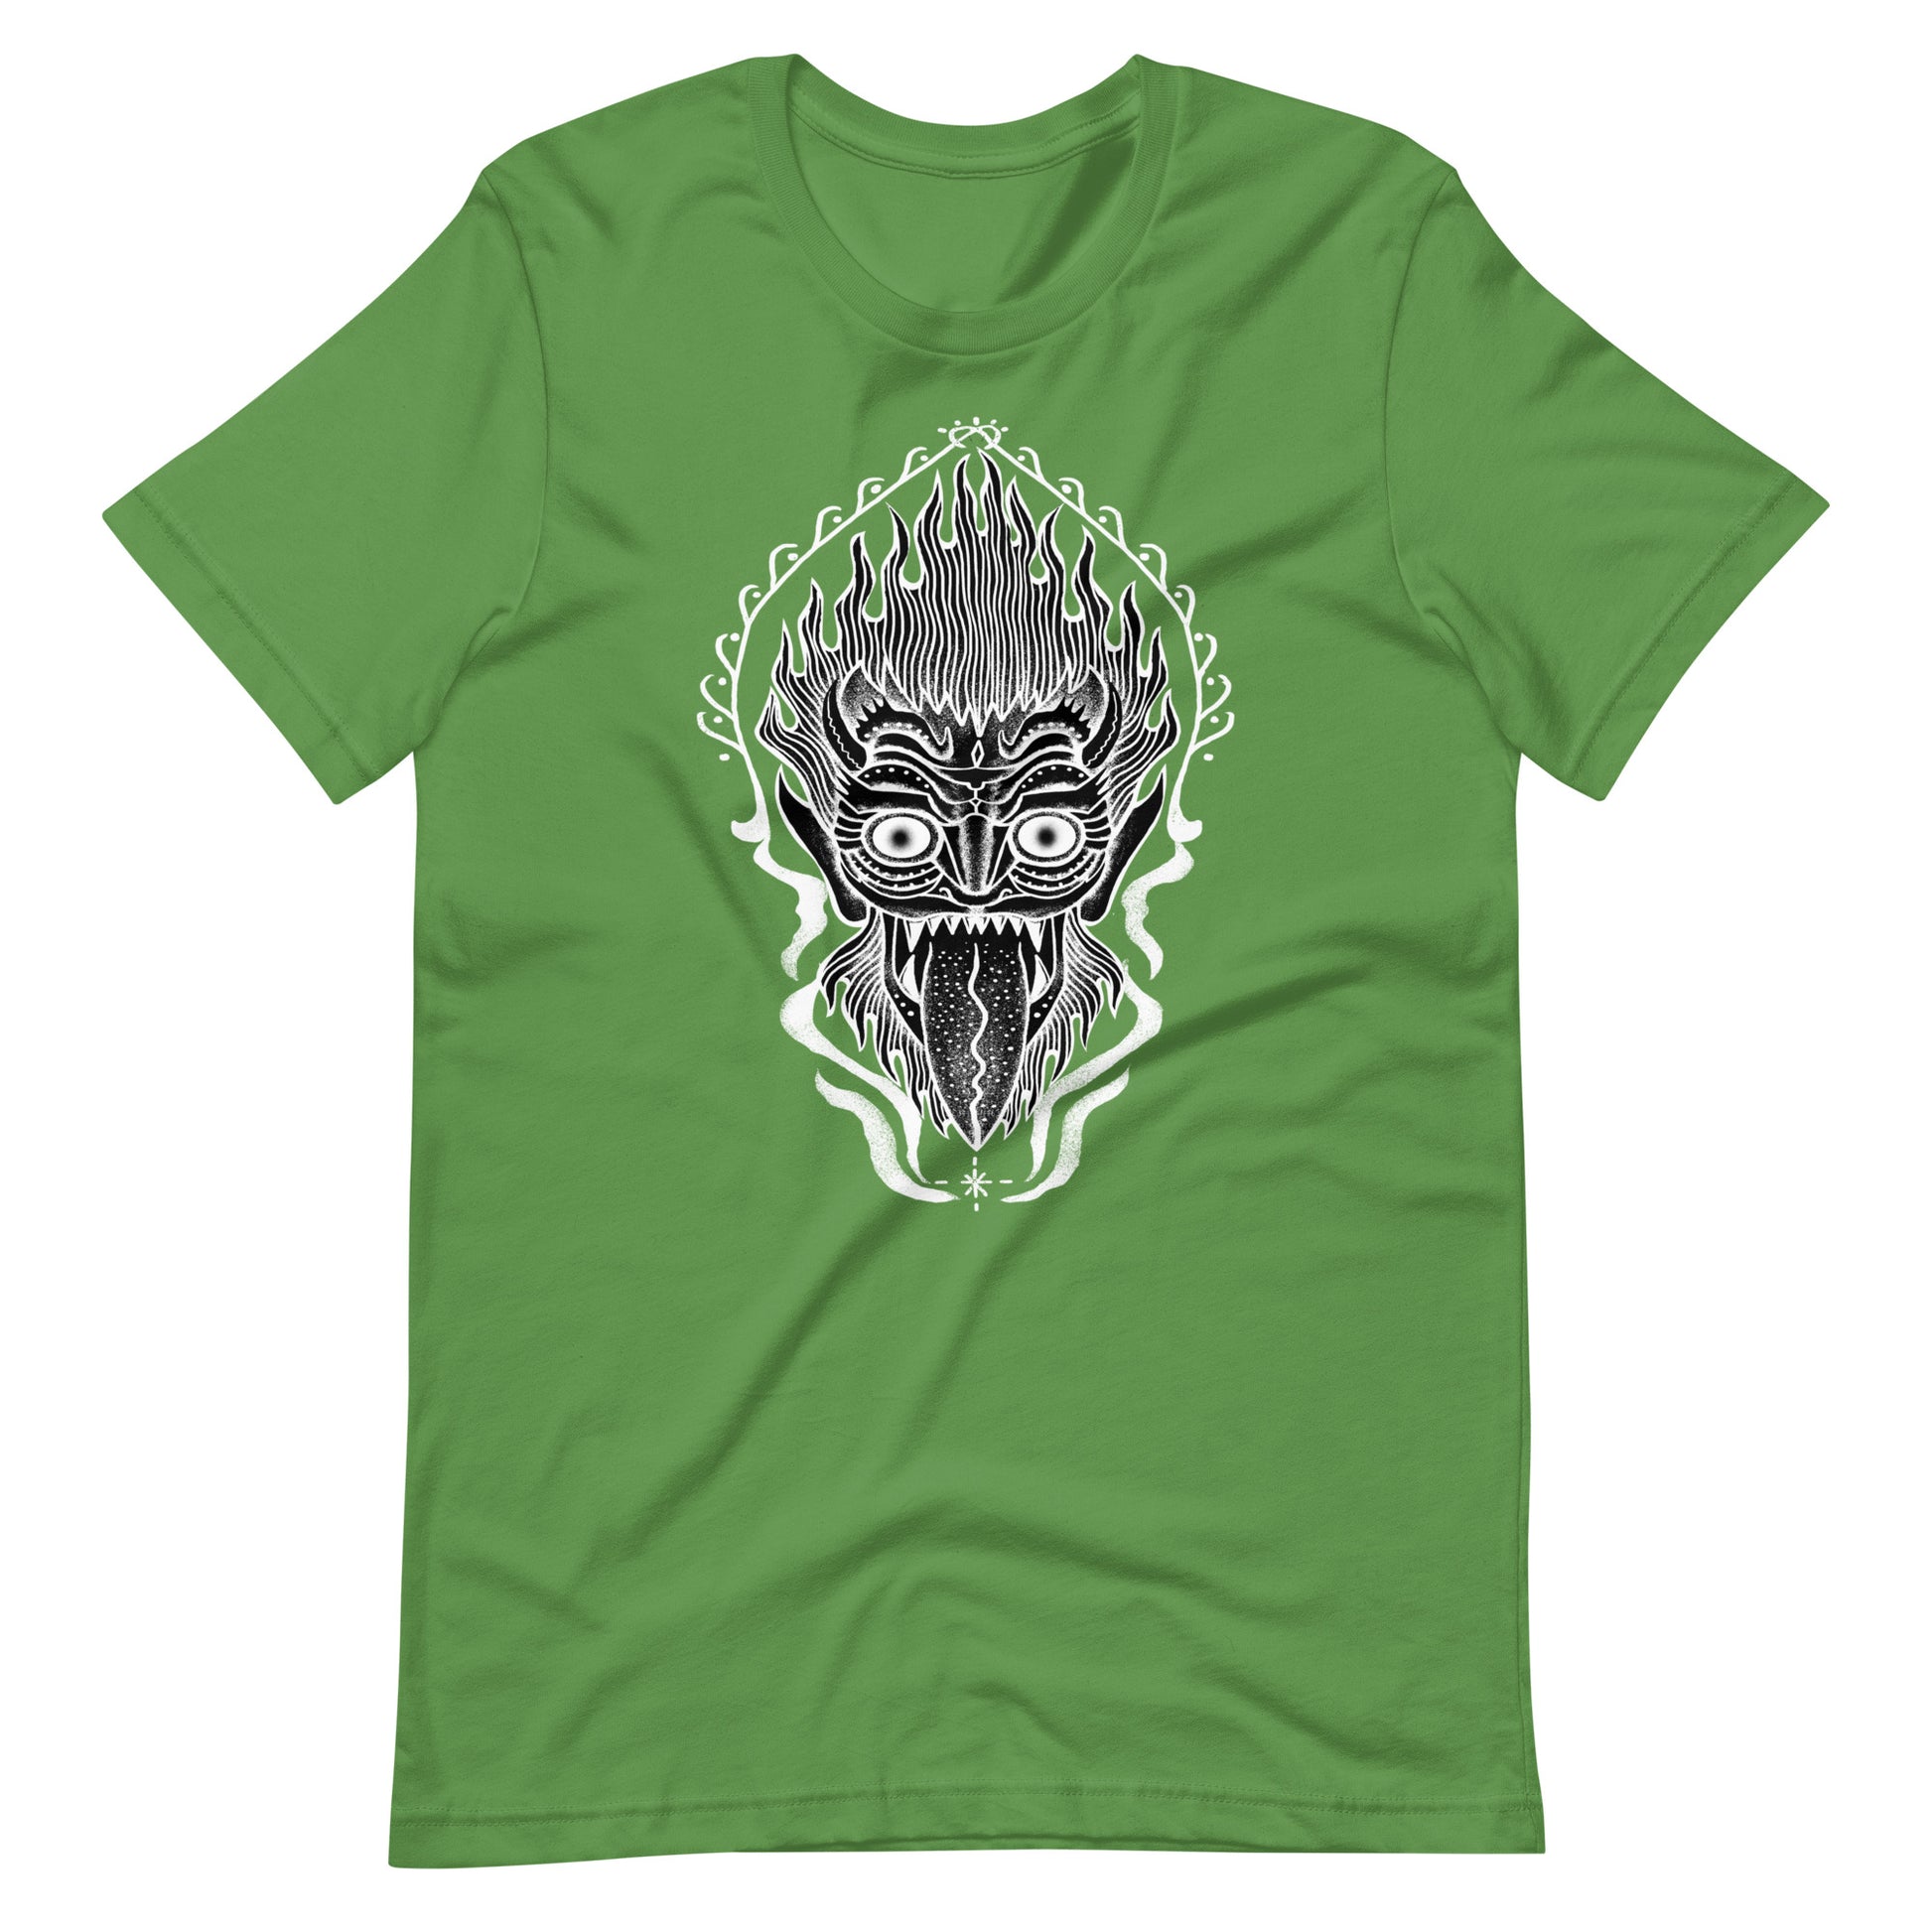 King of Fire - Men's t-shirt - Leaf Front